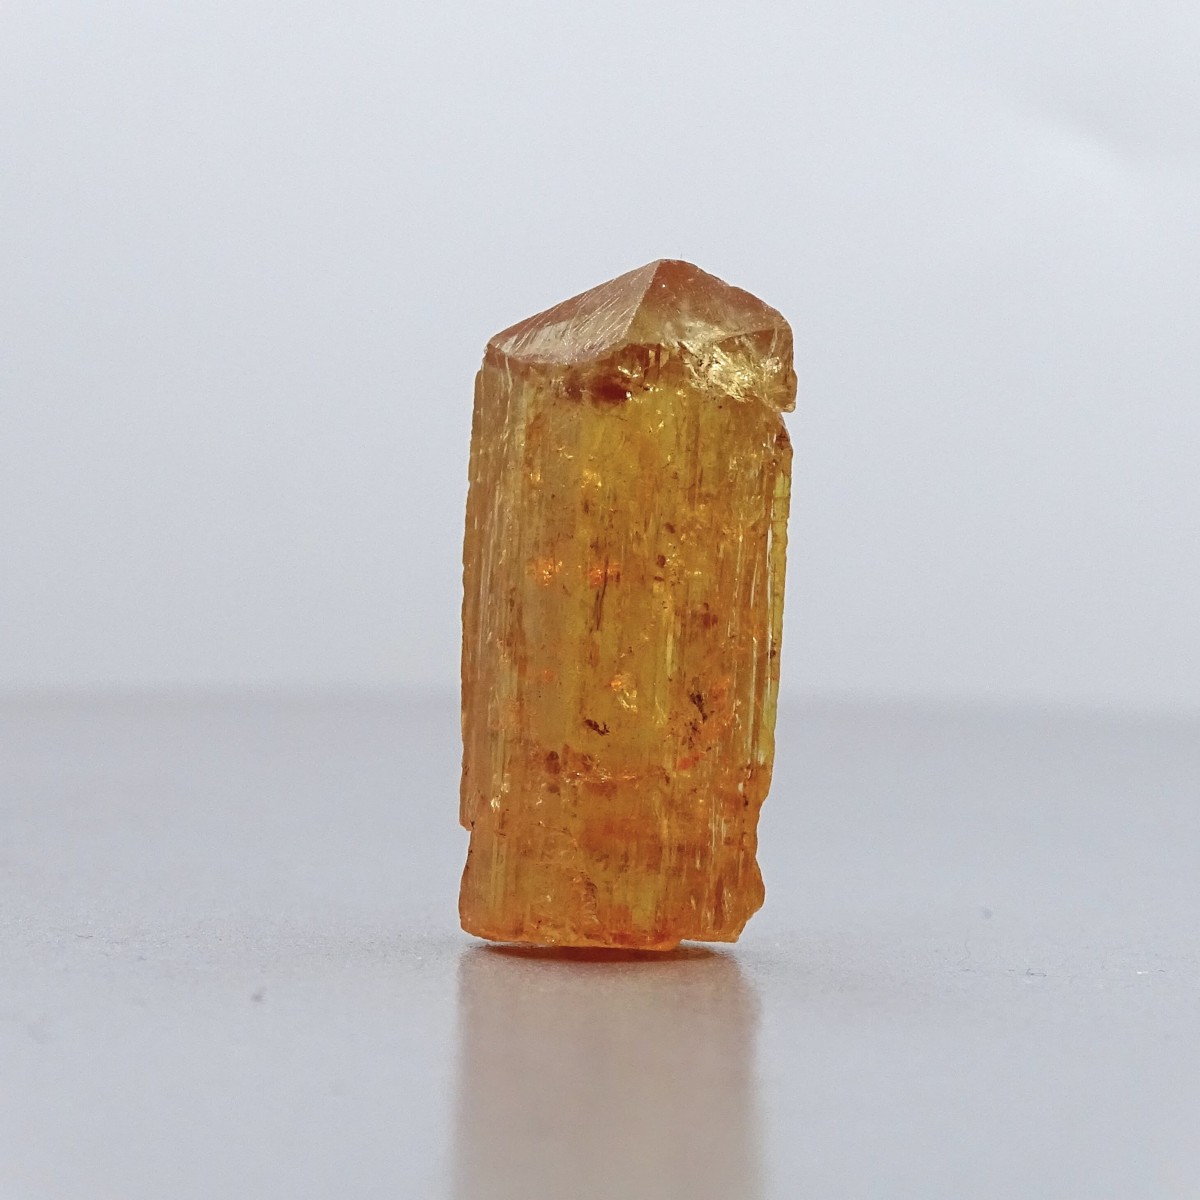 Topaz imperial natural crystal 9.5g, Brazil